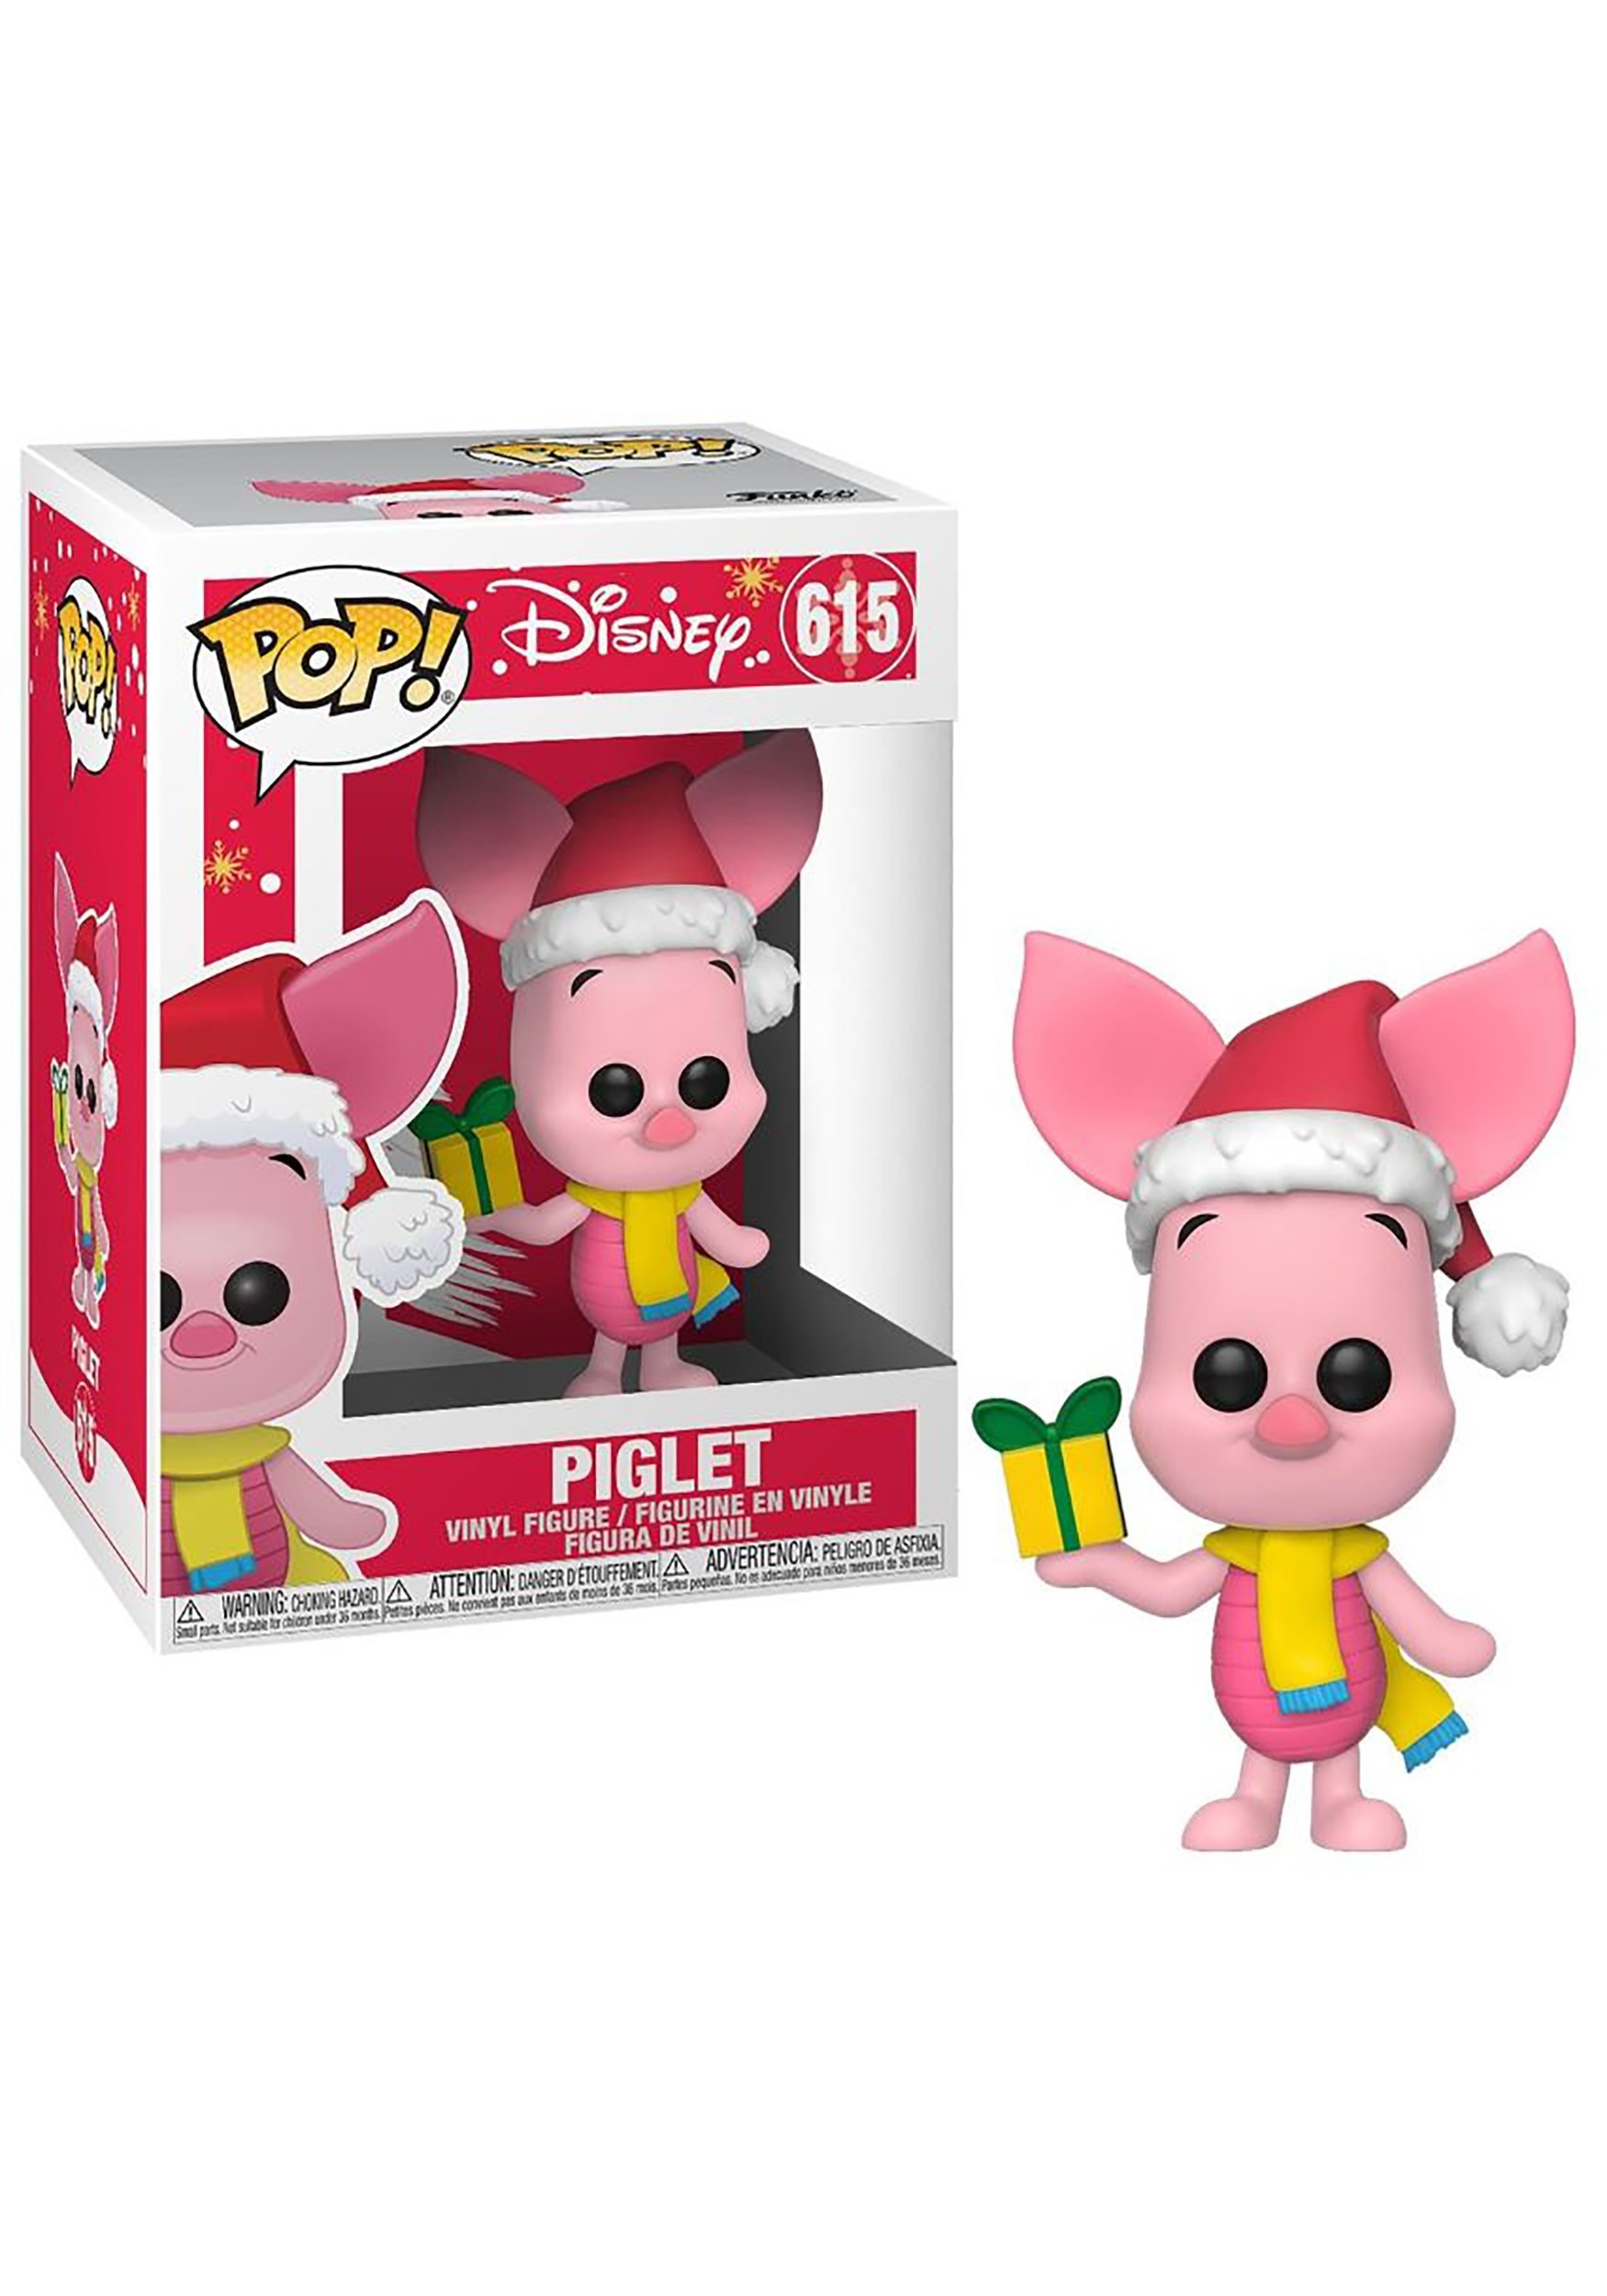 Holiday- Piglet Pop! Disney